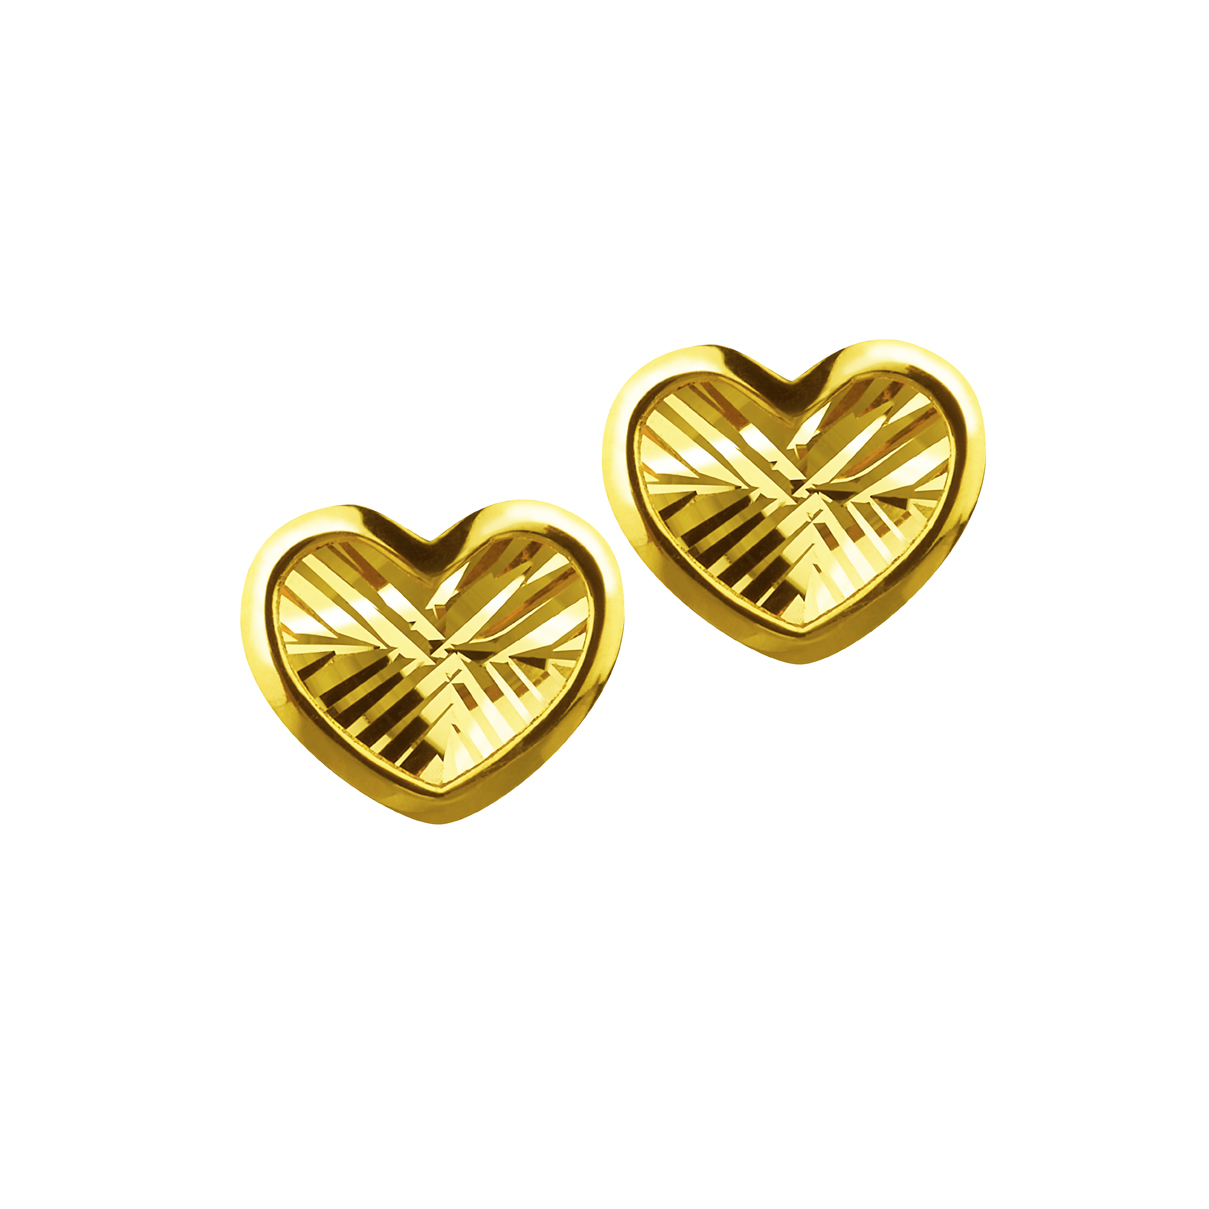 Goldstyle "Knocking Heart" Gold Earrings